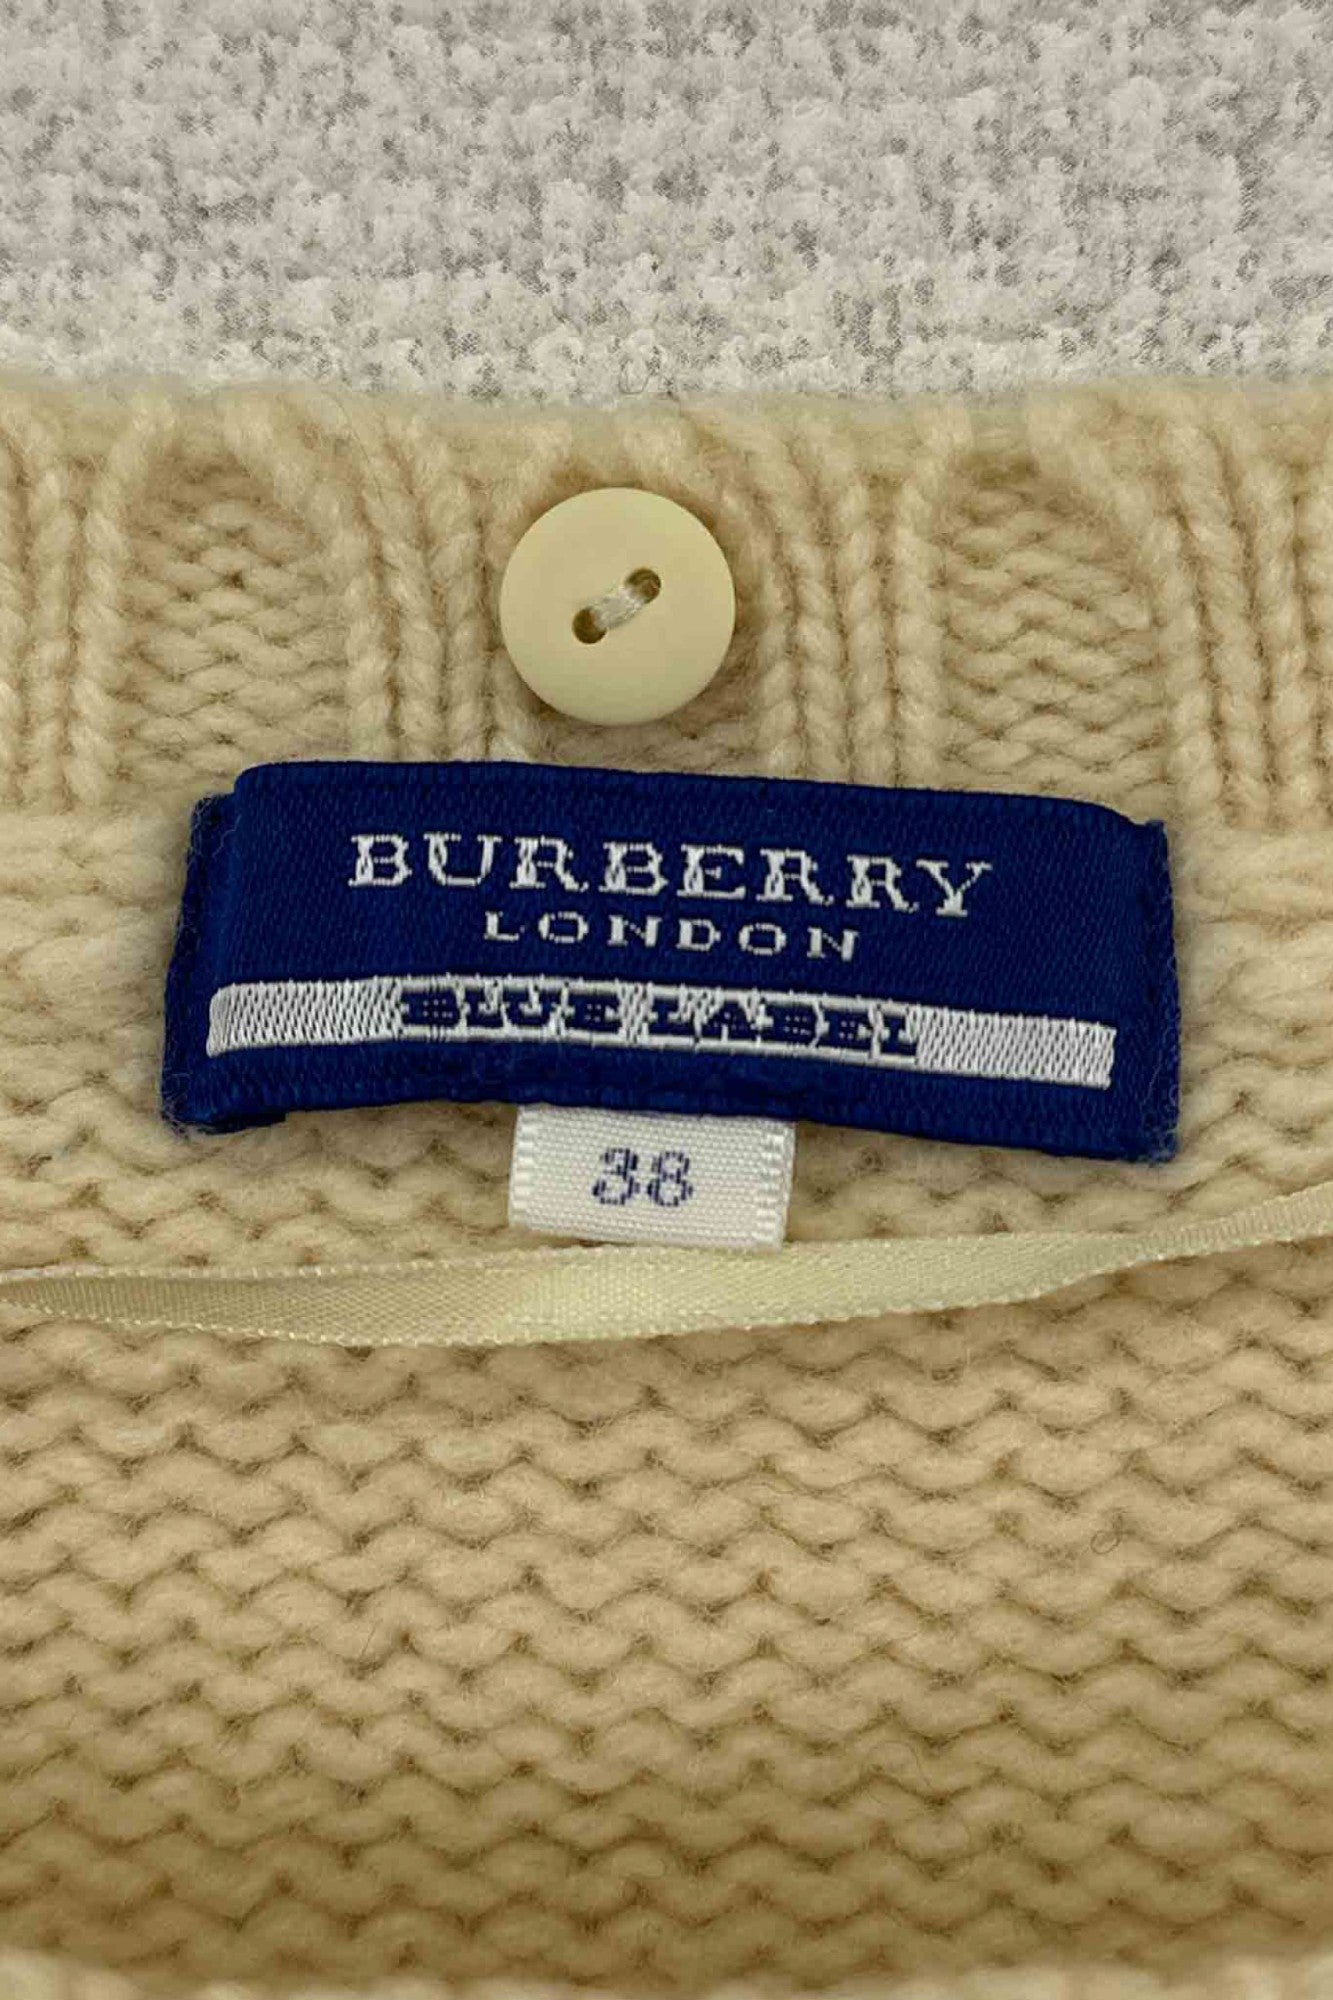 BURBERRY LONDON BLUE LABEL white sweater